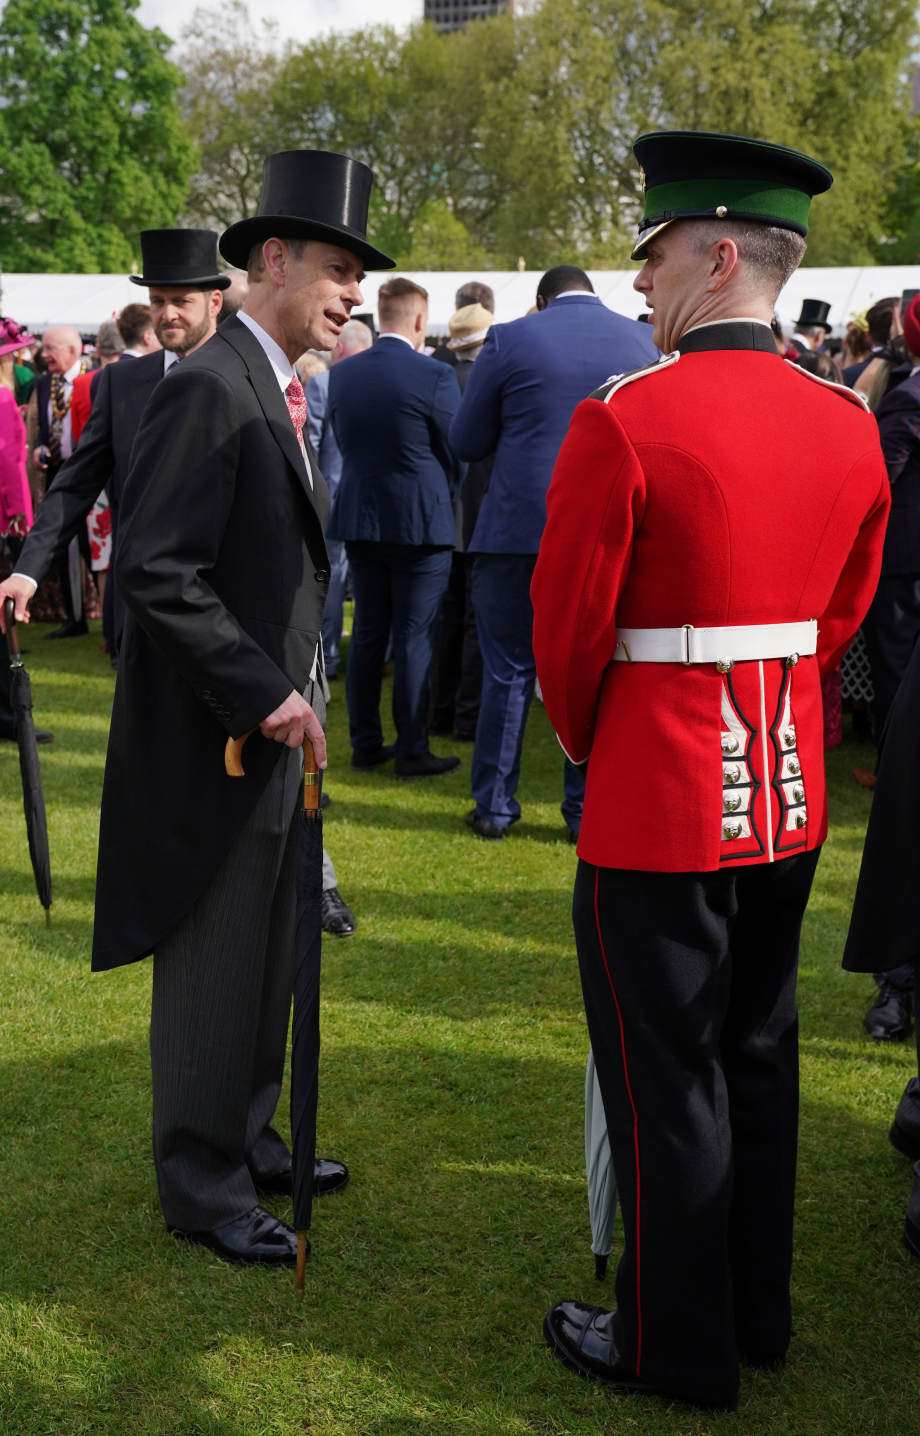 The Duke of Edinburgh at the Buckingham Palace Garden Party